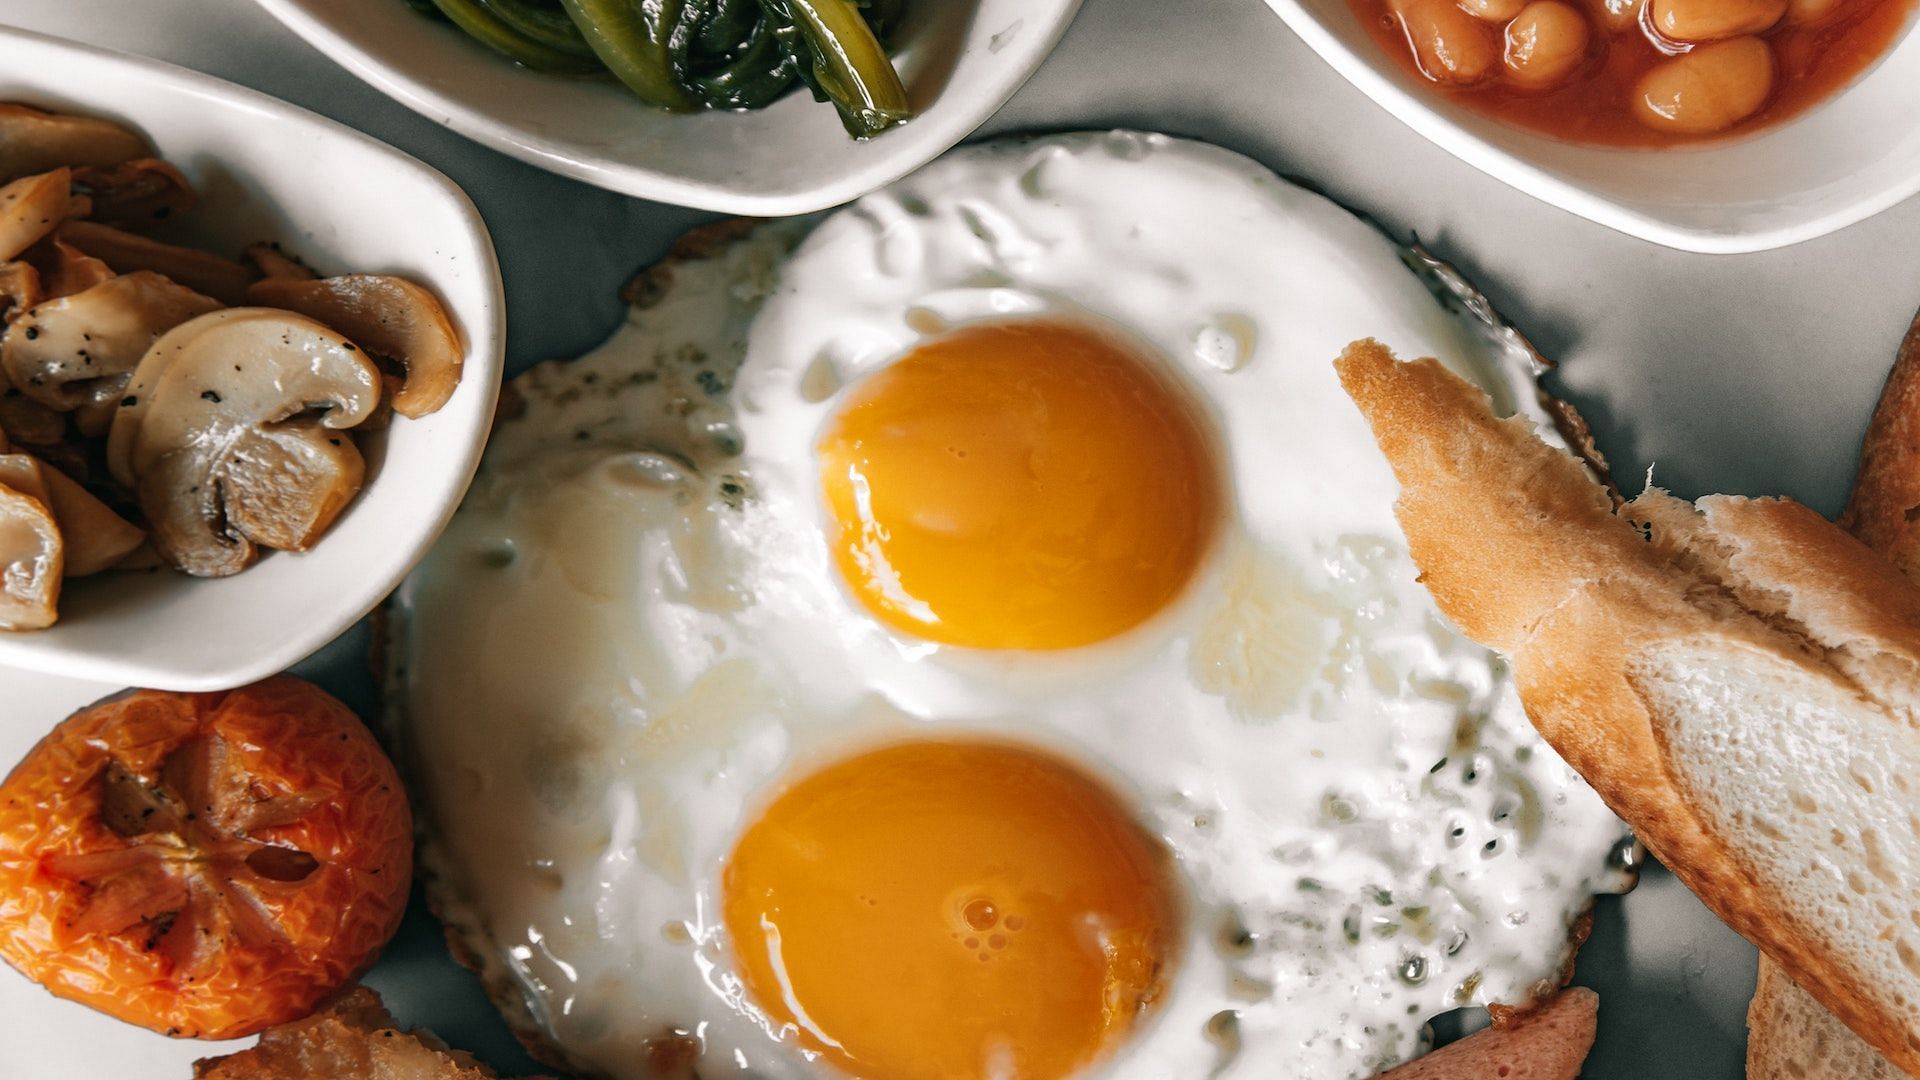 Eggs keep you nourished and satiated. Image via Pexels/Roman Odintsov